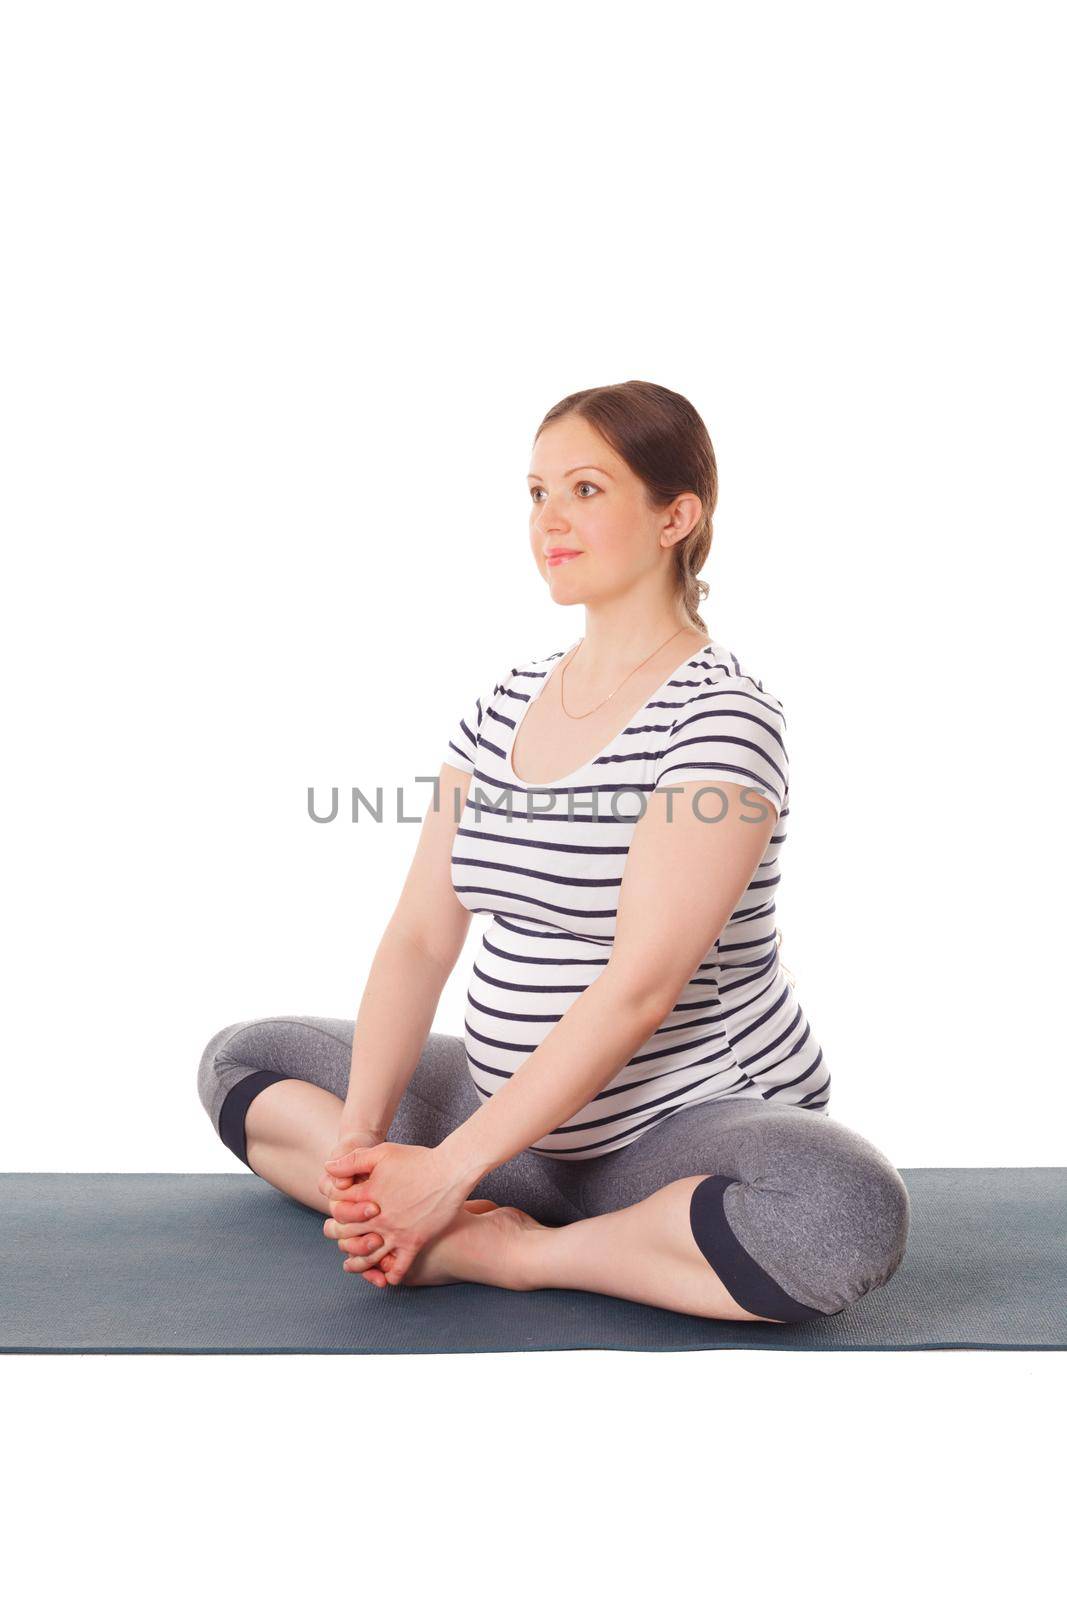 Pregnant woman doing yoga asana Baddha Konasana by dimol